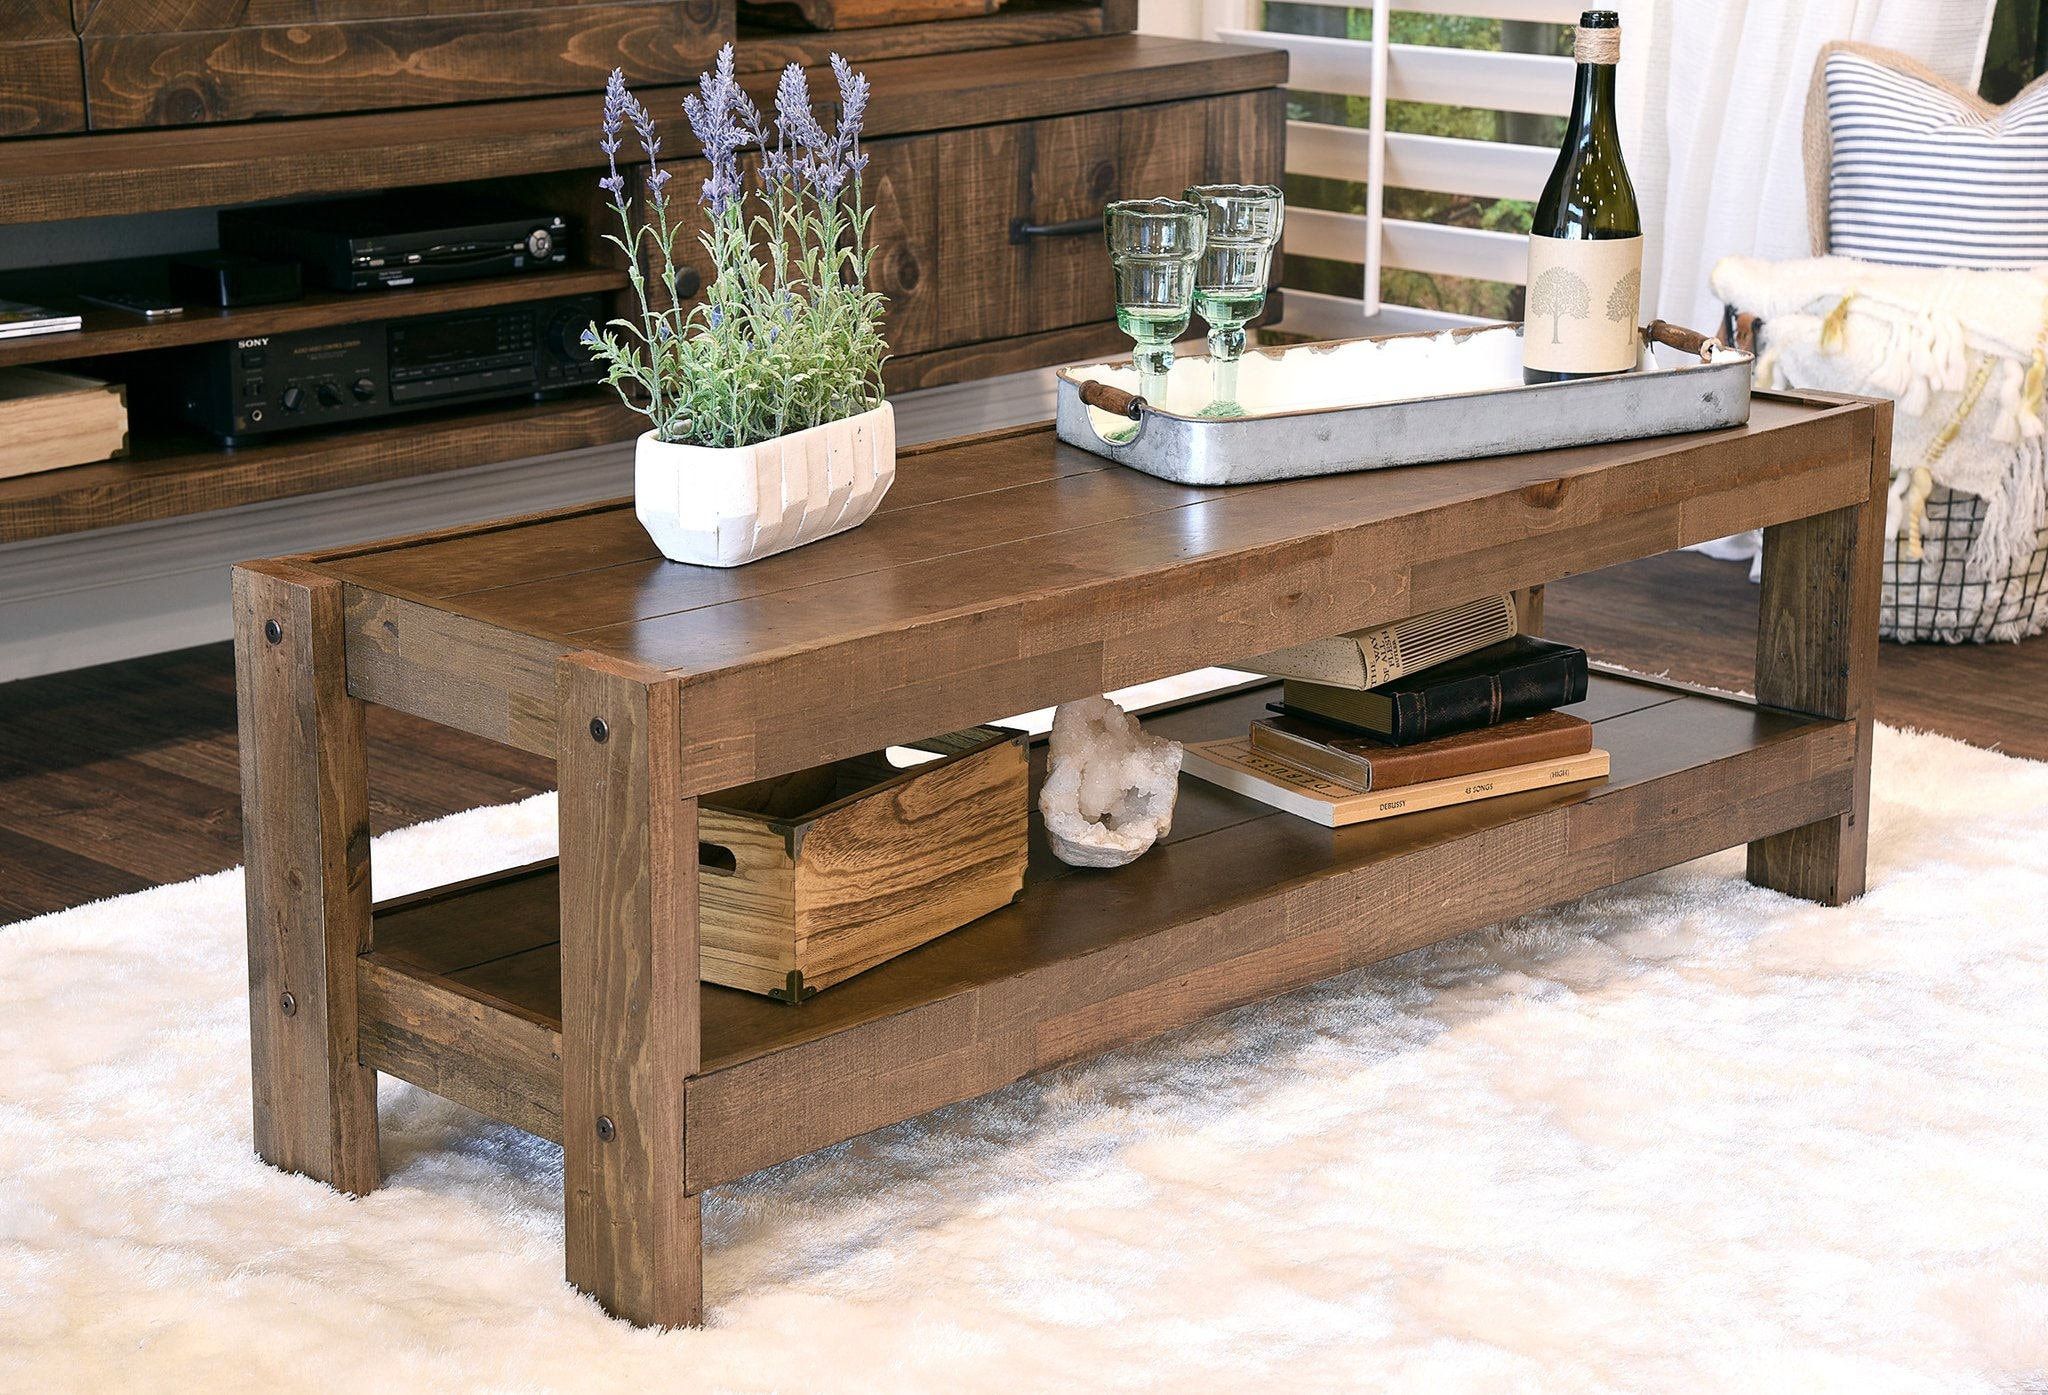 Reclaimed Wood Coffee Table Rustic Barn Wood Style | Etsy With Regard To Rustic Wood Coffee Tables (View 5 of 21)